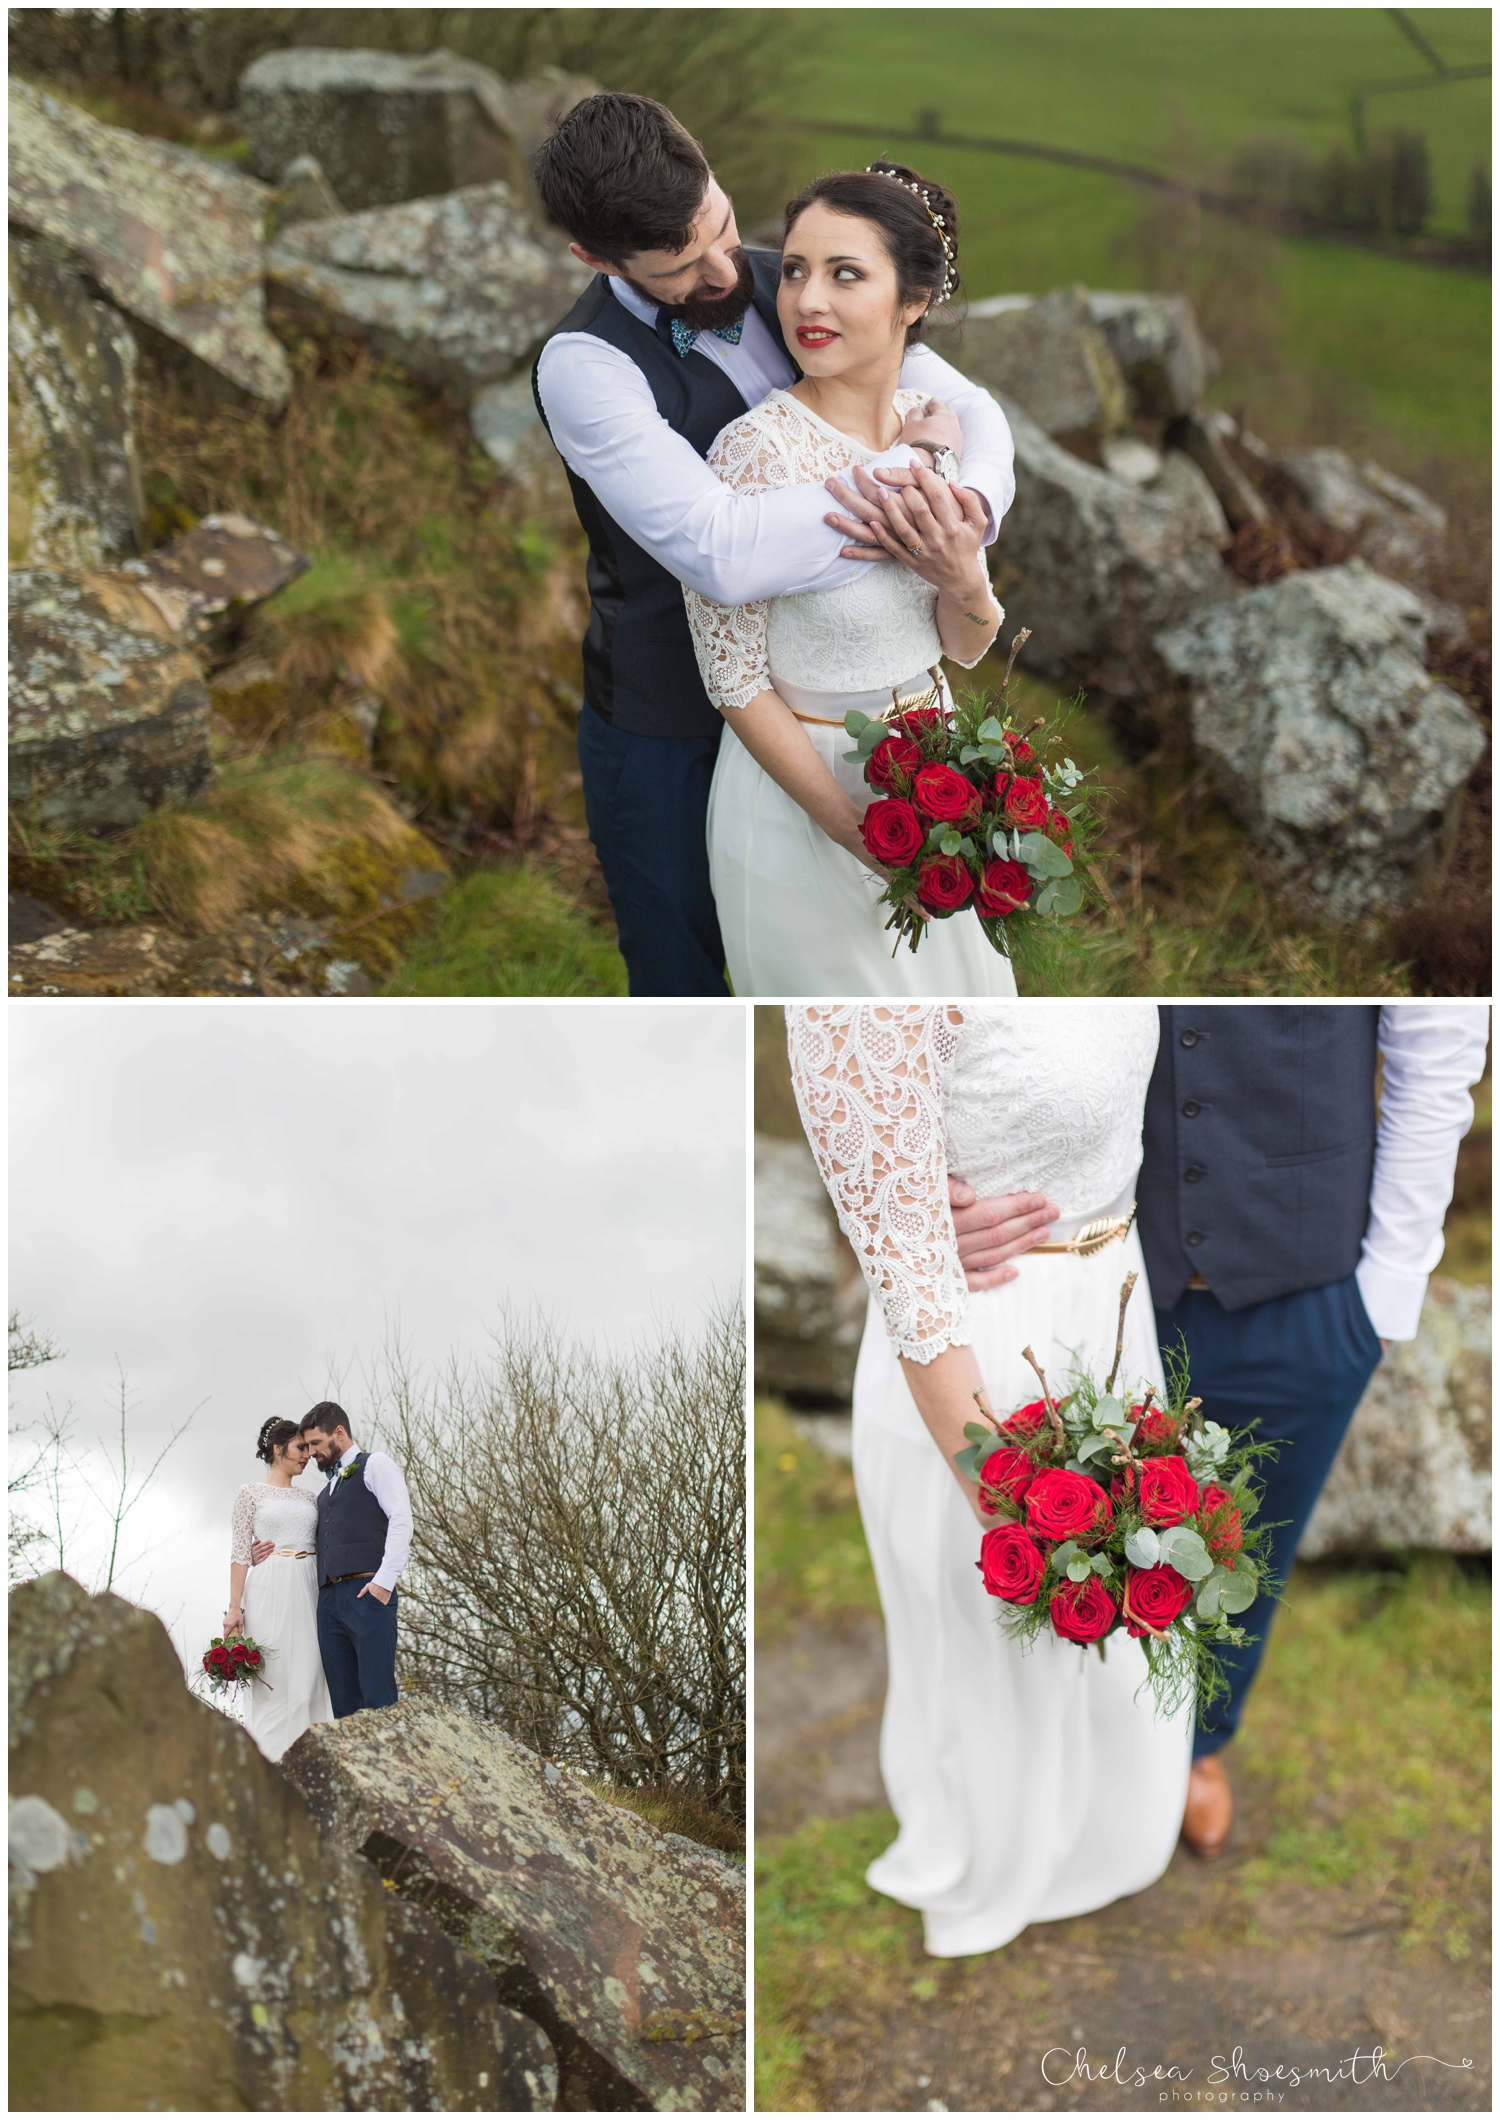 (140 of 183) Deya & Craig Bridal Styled Shoot Teggsnose country park macclesfield cheshire wedding photographer chelsea shoesmith photography_